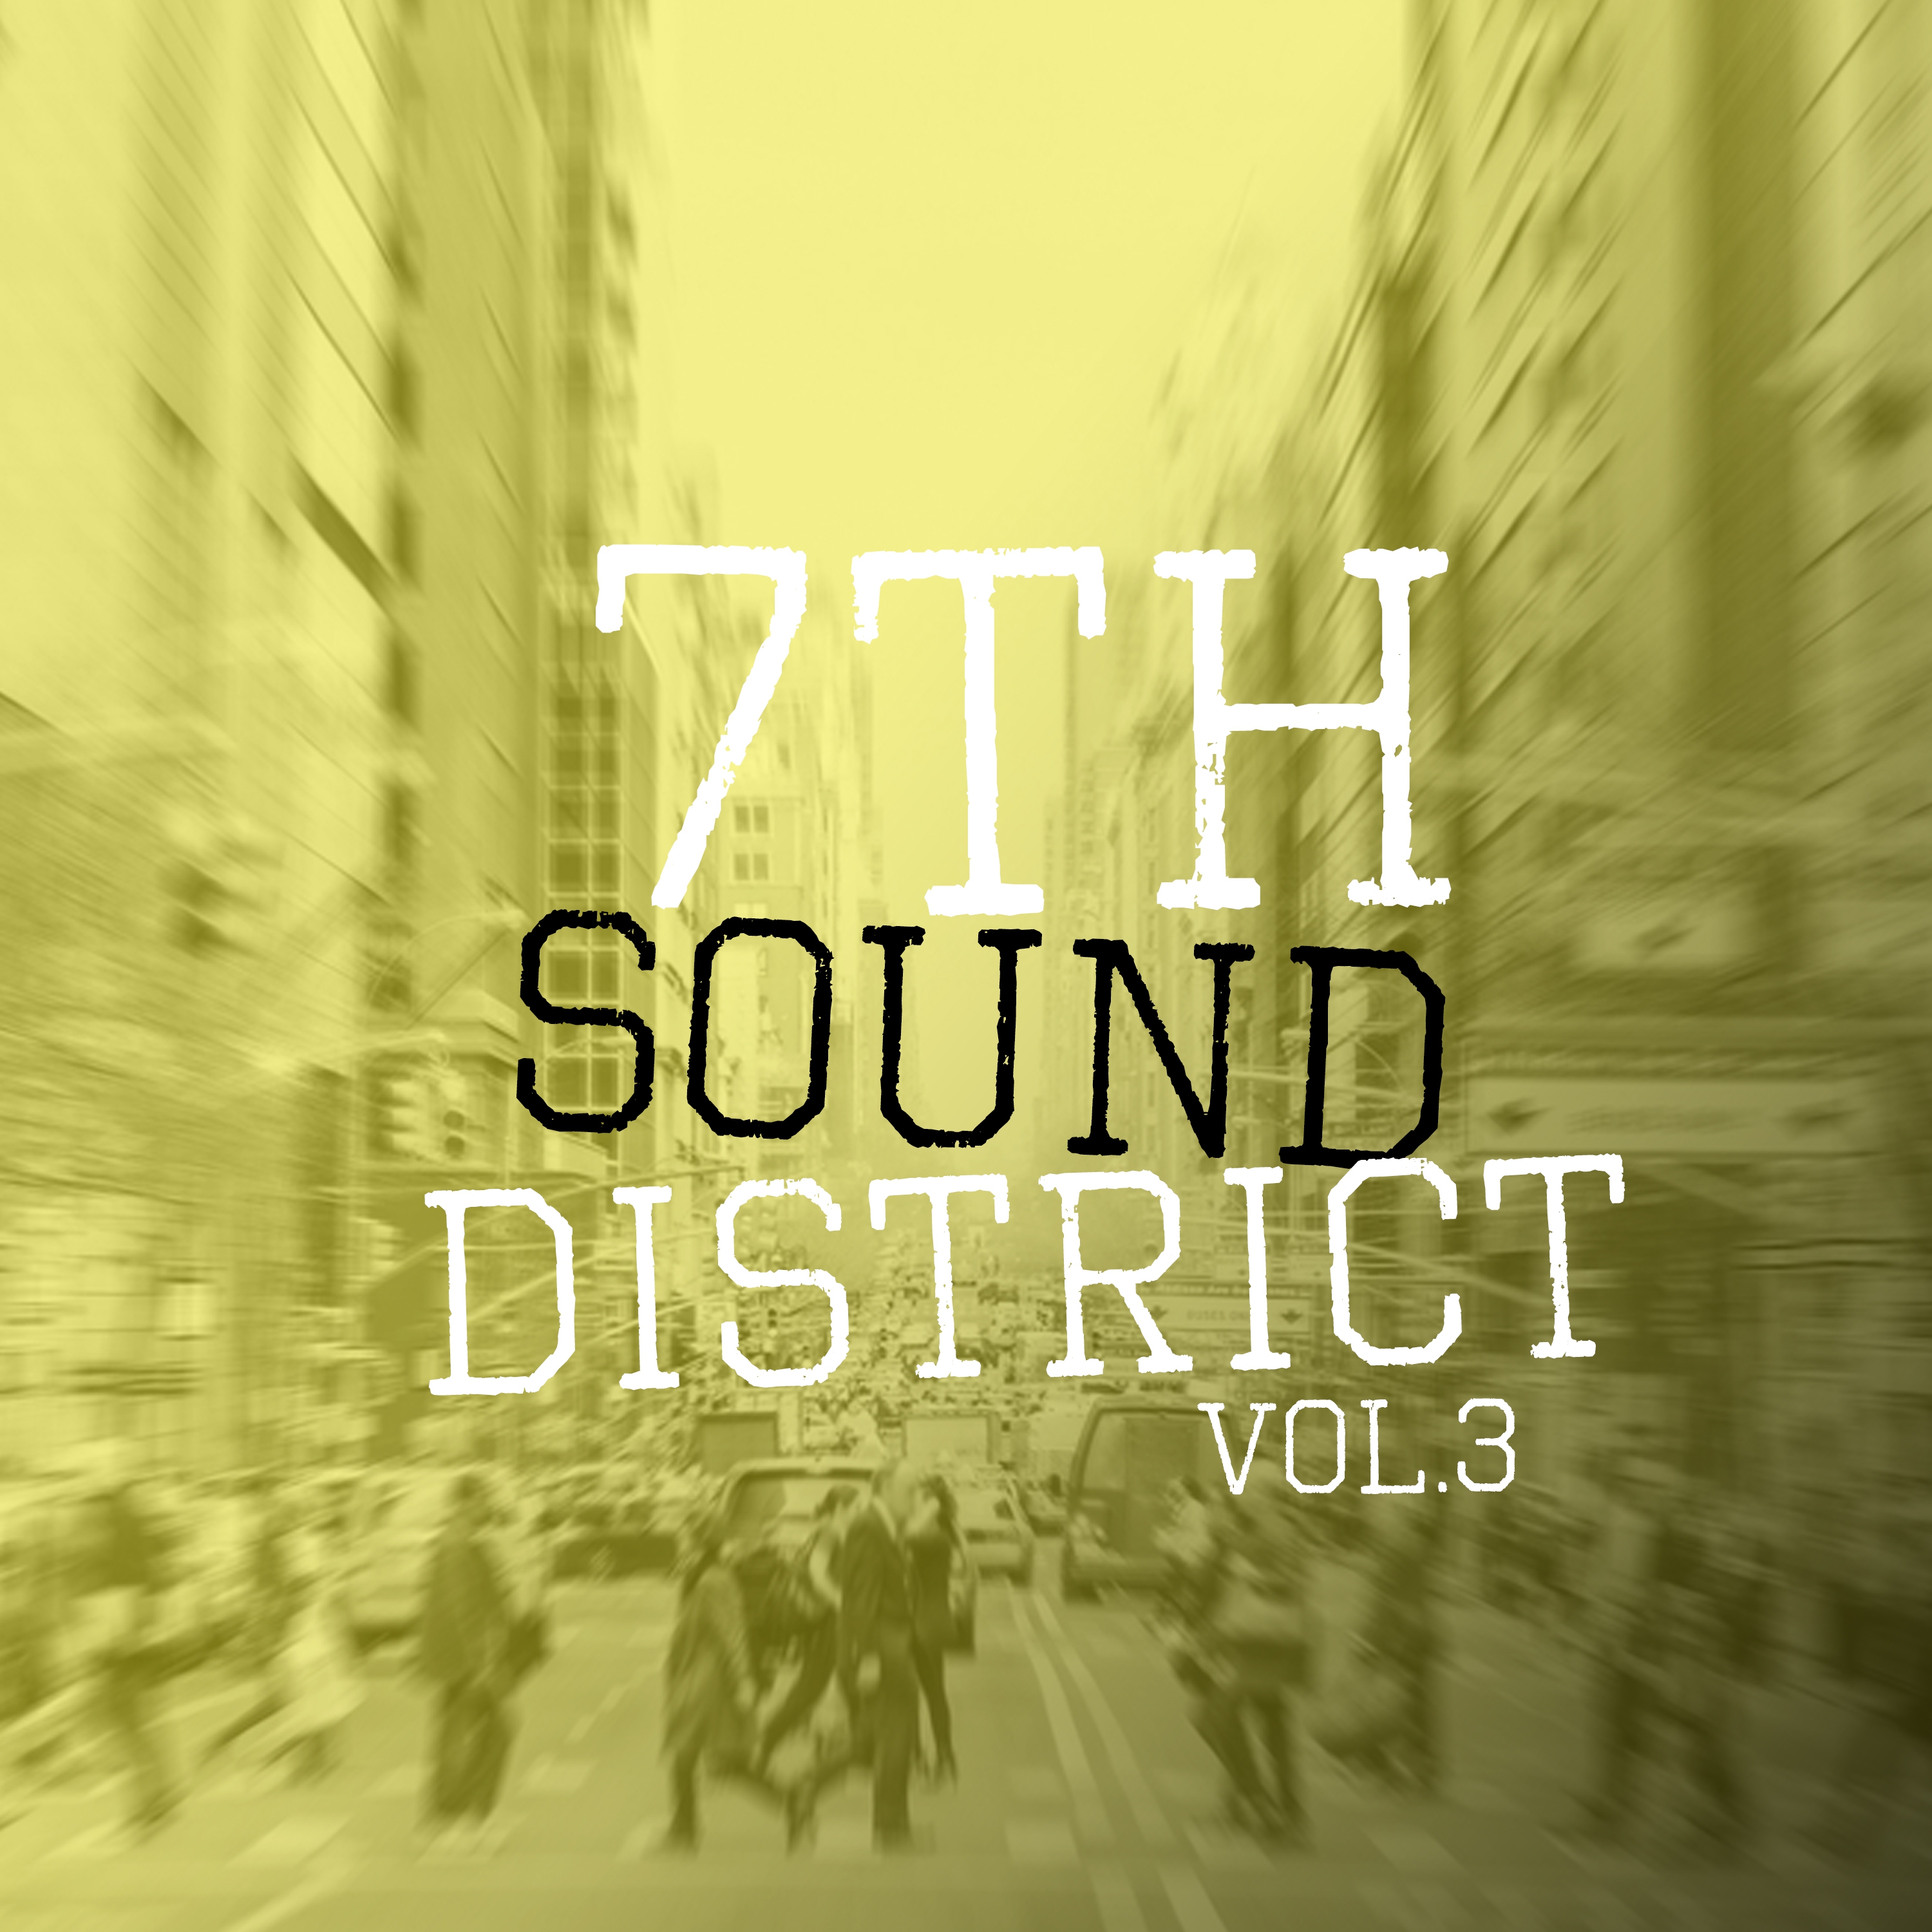 7th Sound District, Vol. 3